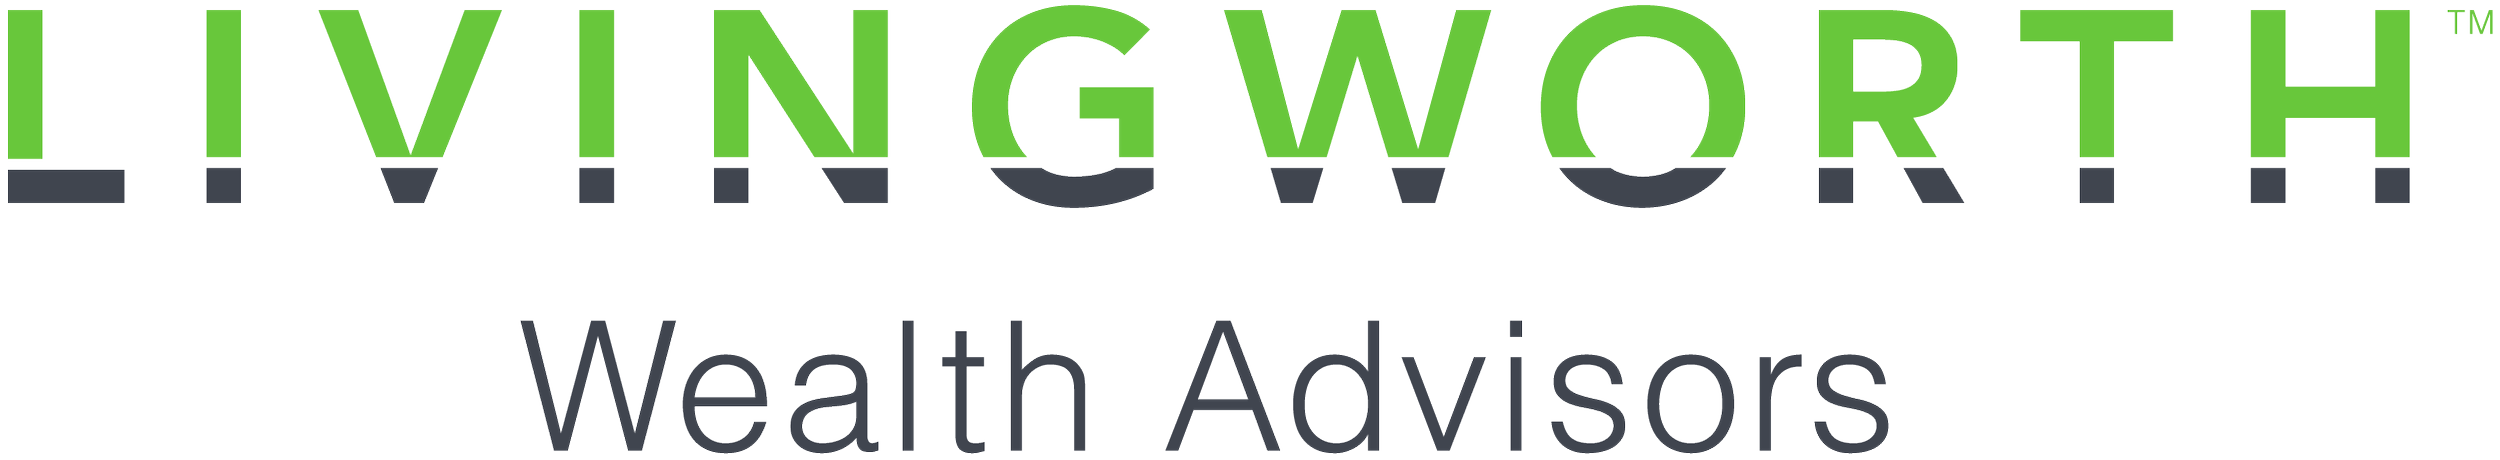 Livingworth_Logo_Full_RGB_Green-Gray.png